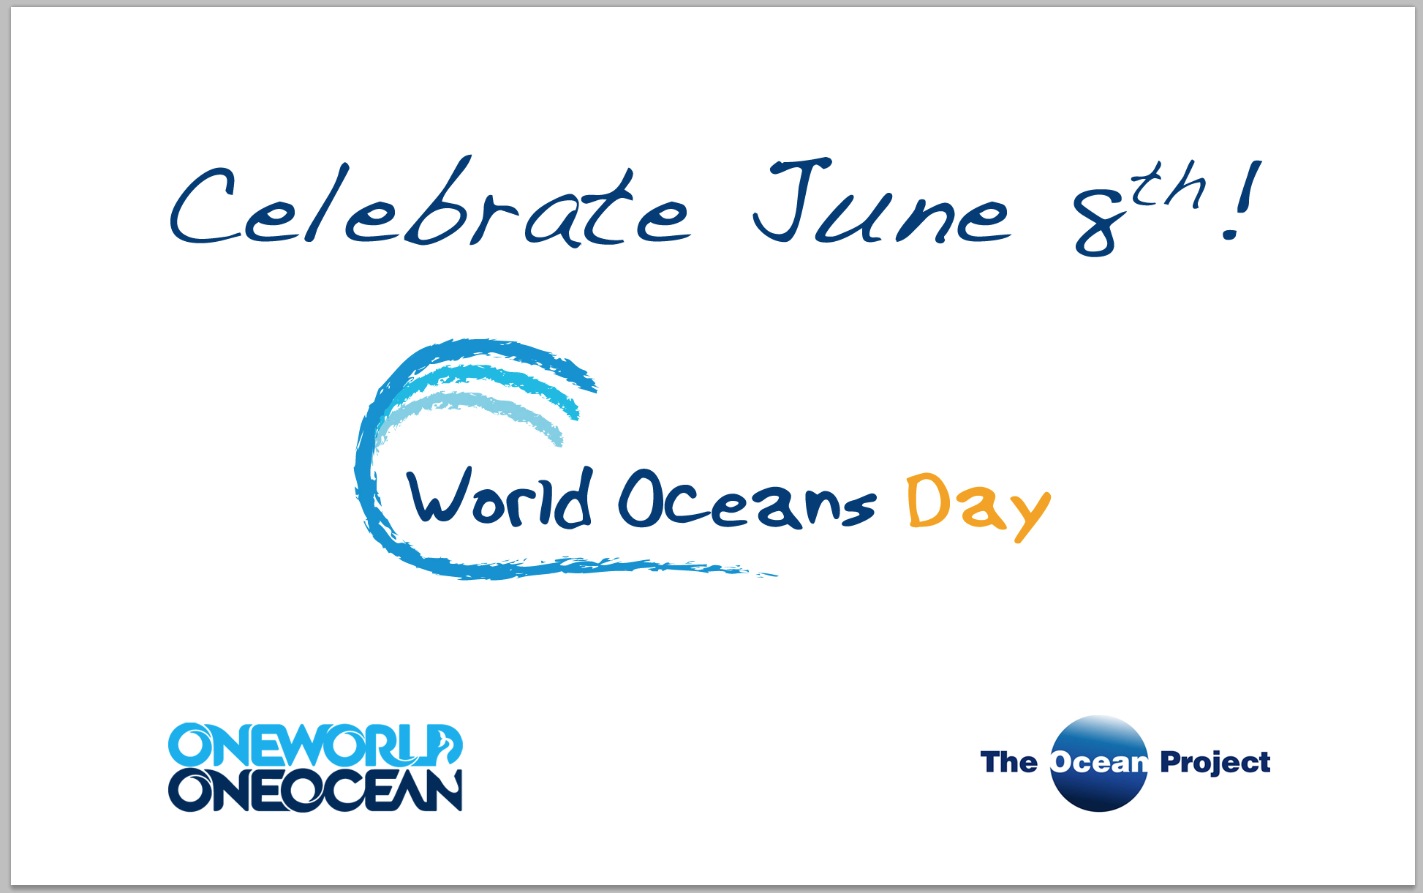 Celebrate June 8th World Ocean Day